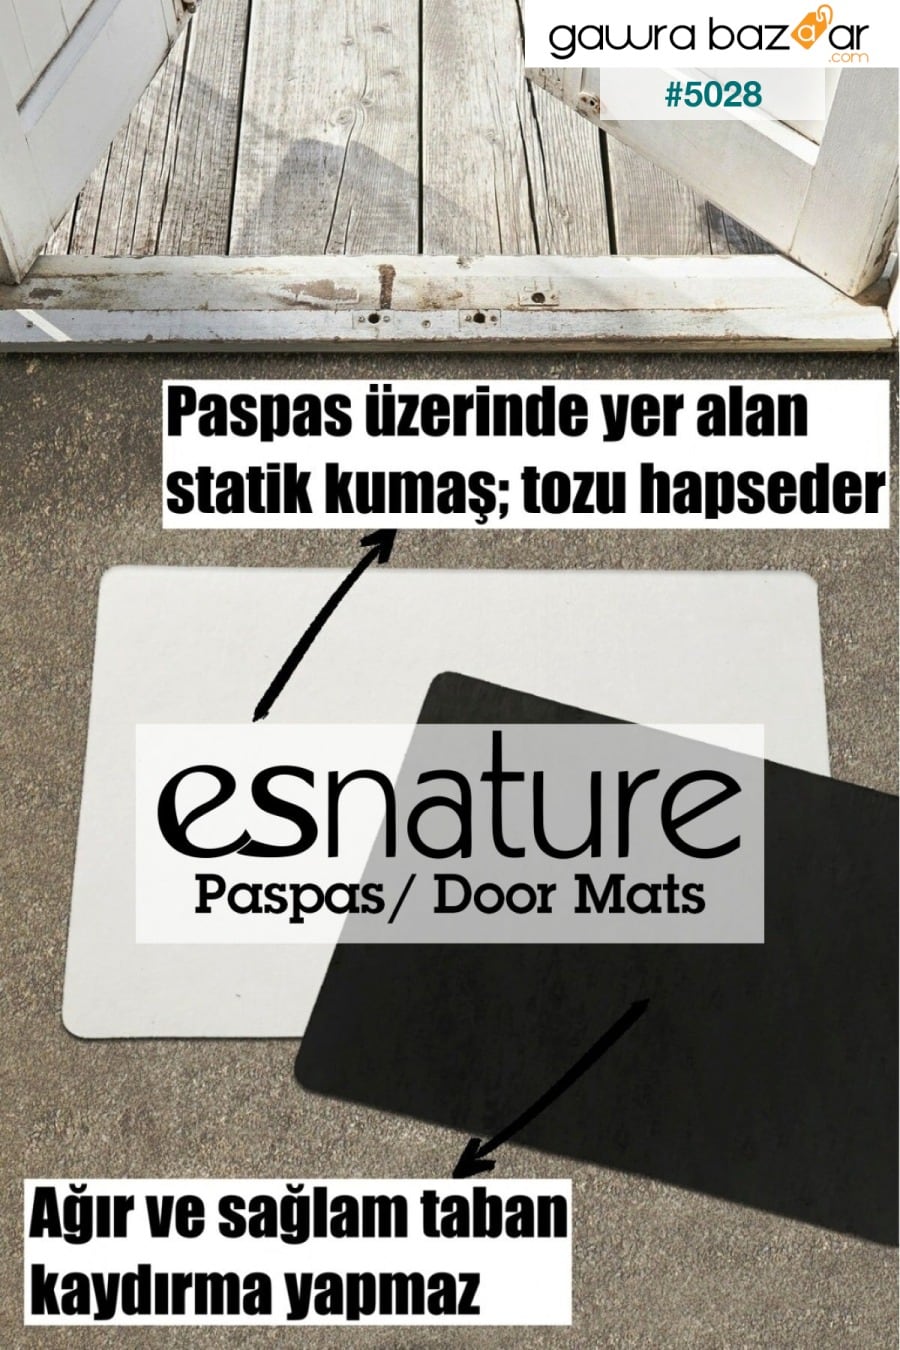 45x70 سم طباعة رقمية ، سجادة باب داخلية وخارجية متعددة الأغراض بتصميم Sweet Home esnature 1